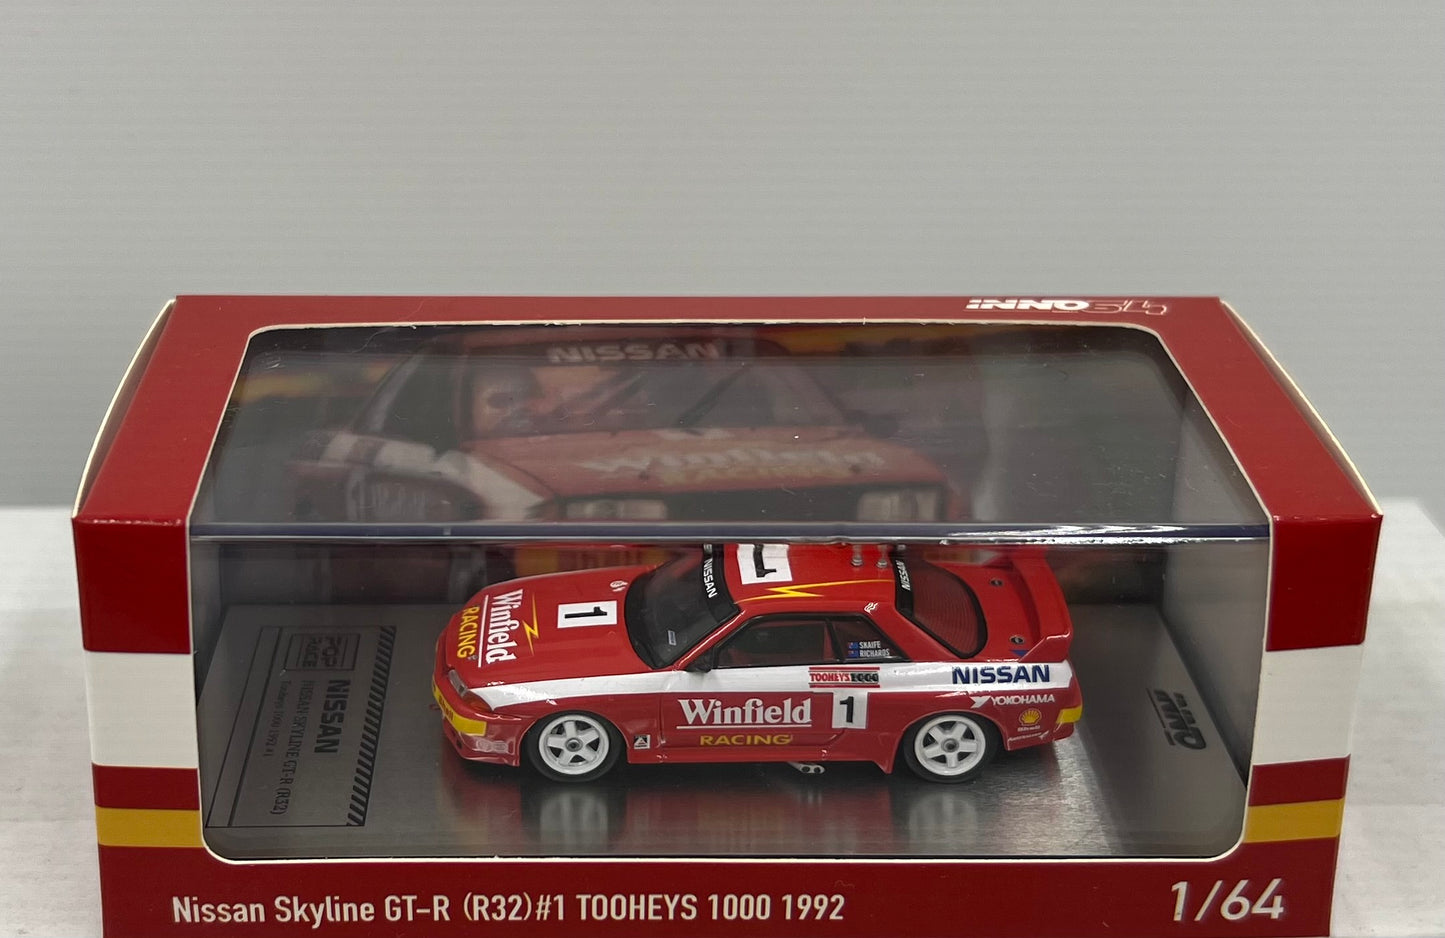 1:64 Nissan Skyline GT-R (R32) #1 Winfield Team Nissan 1992 Toohey’s 1000 Skaife Richards INNO64